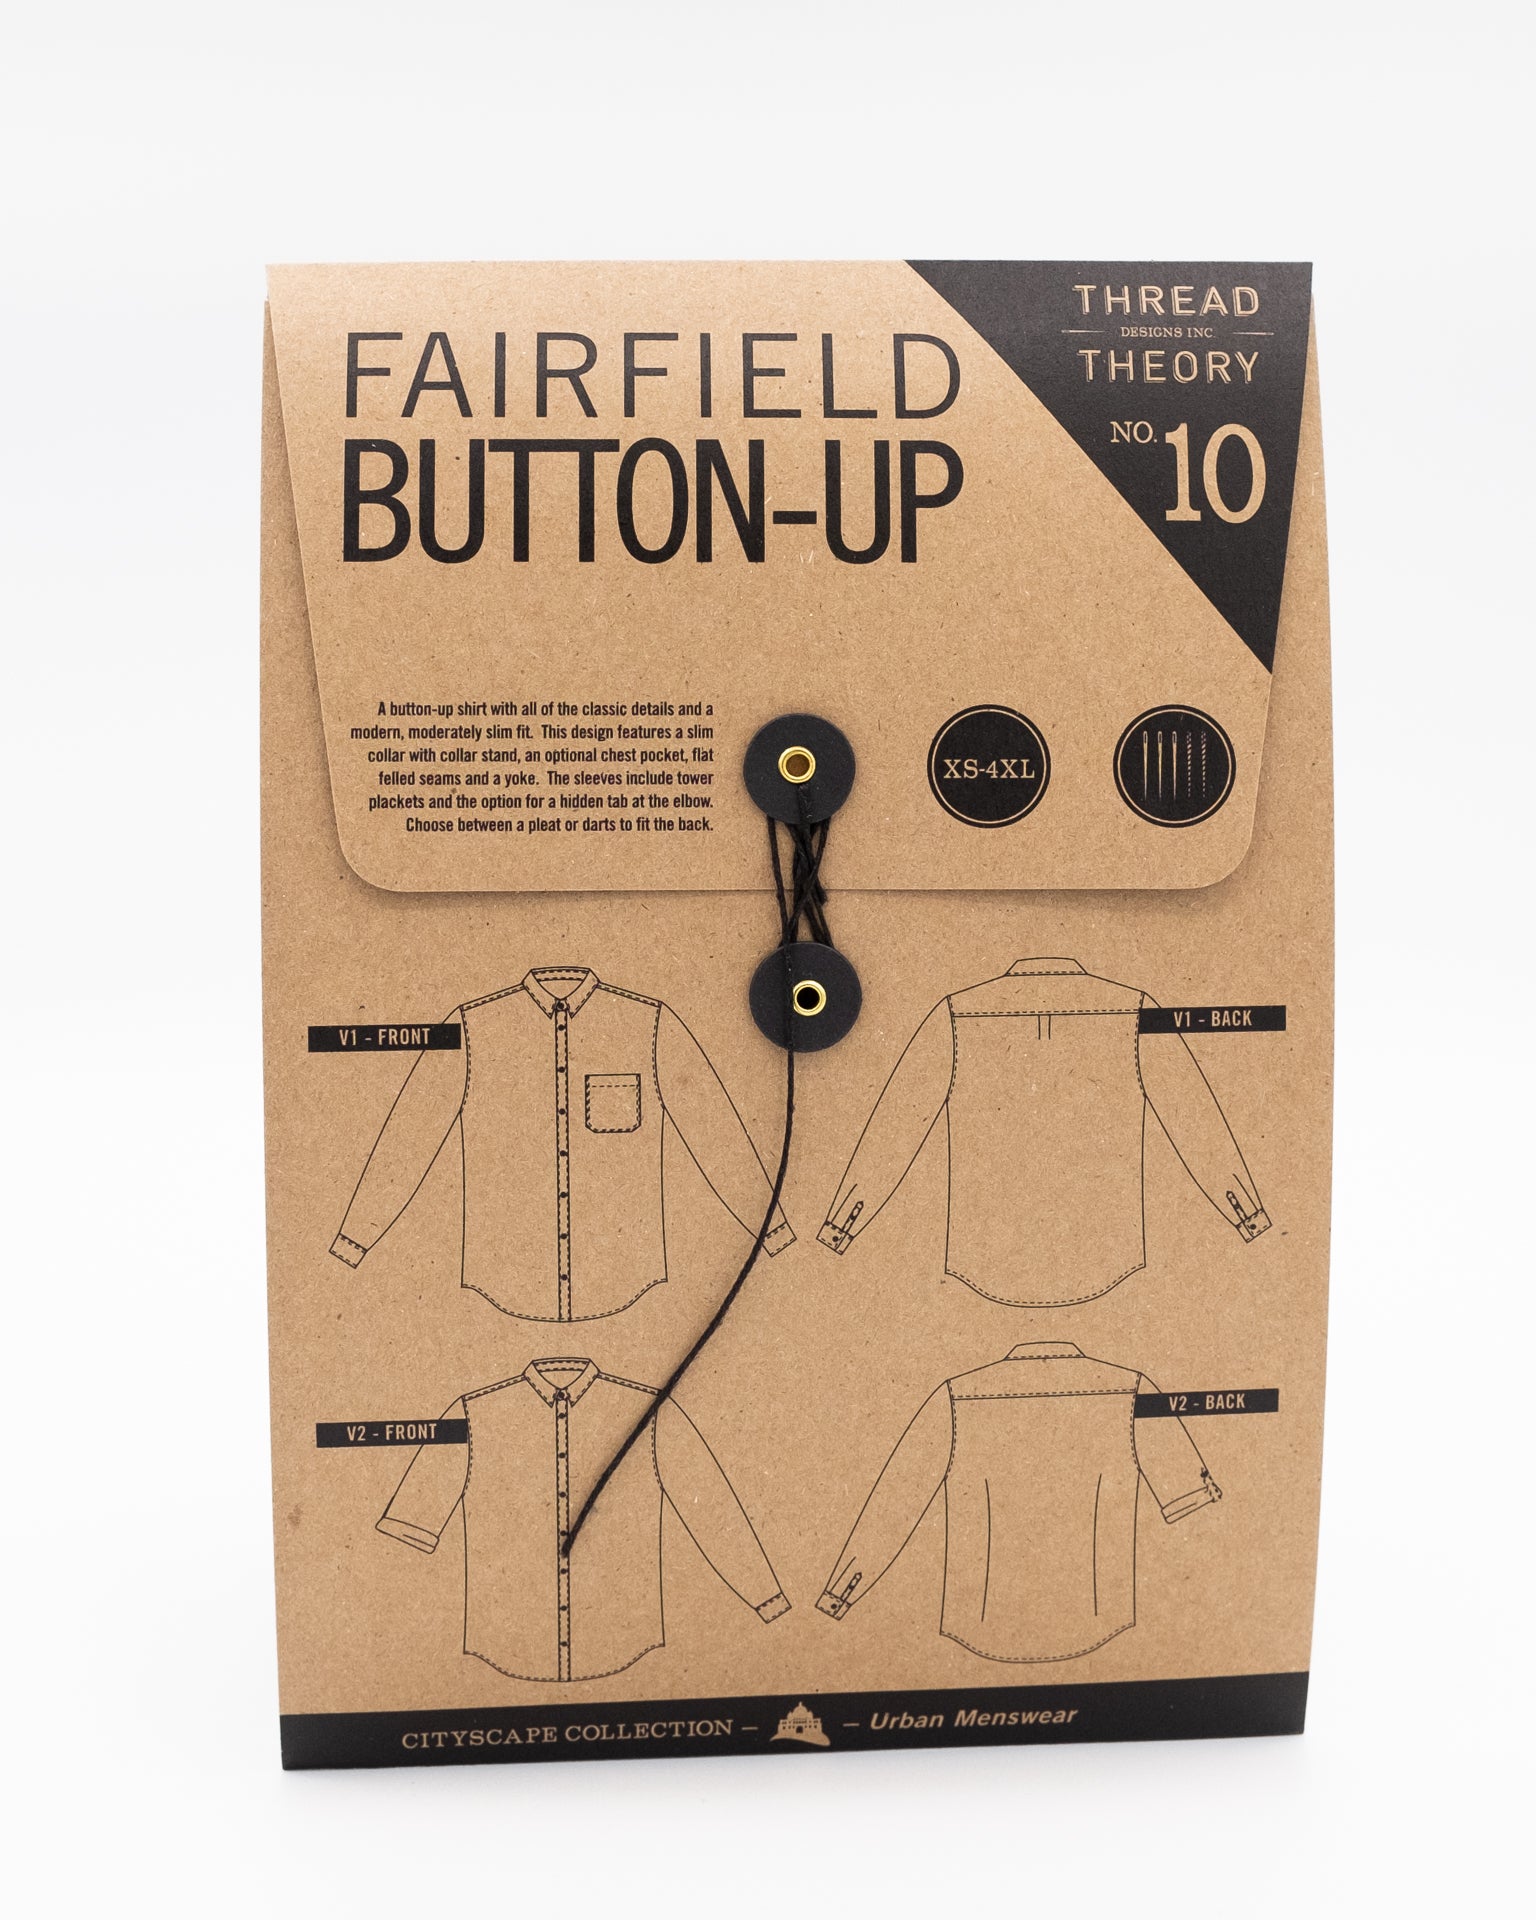 Fairfield Button-up Shirt Tissue Pattern – Thread Theory